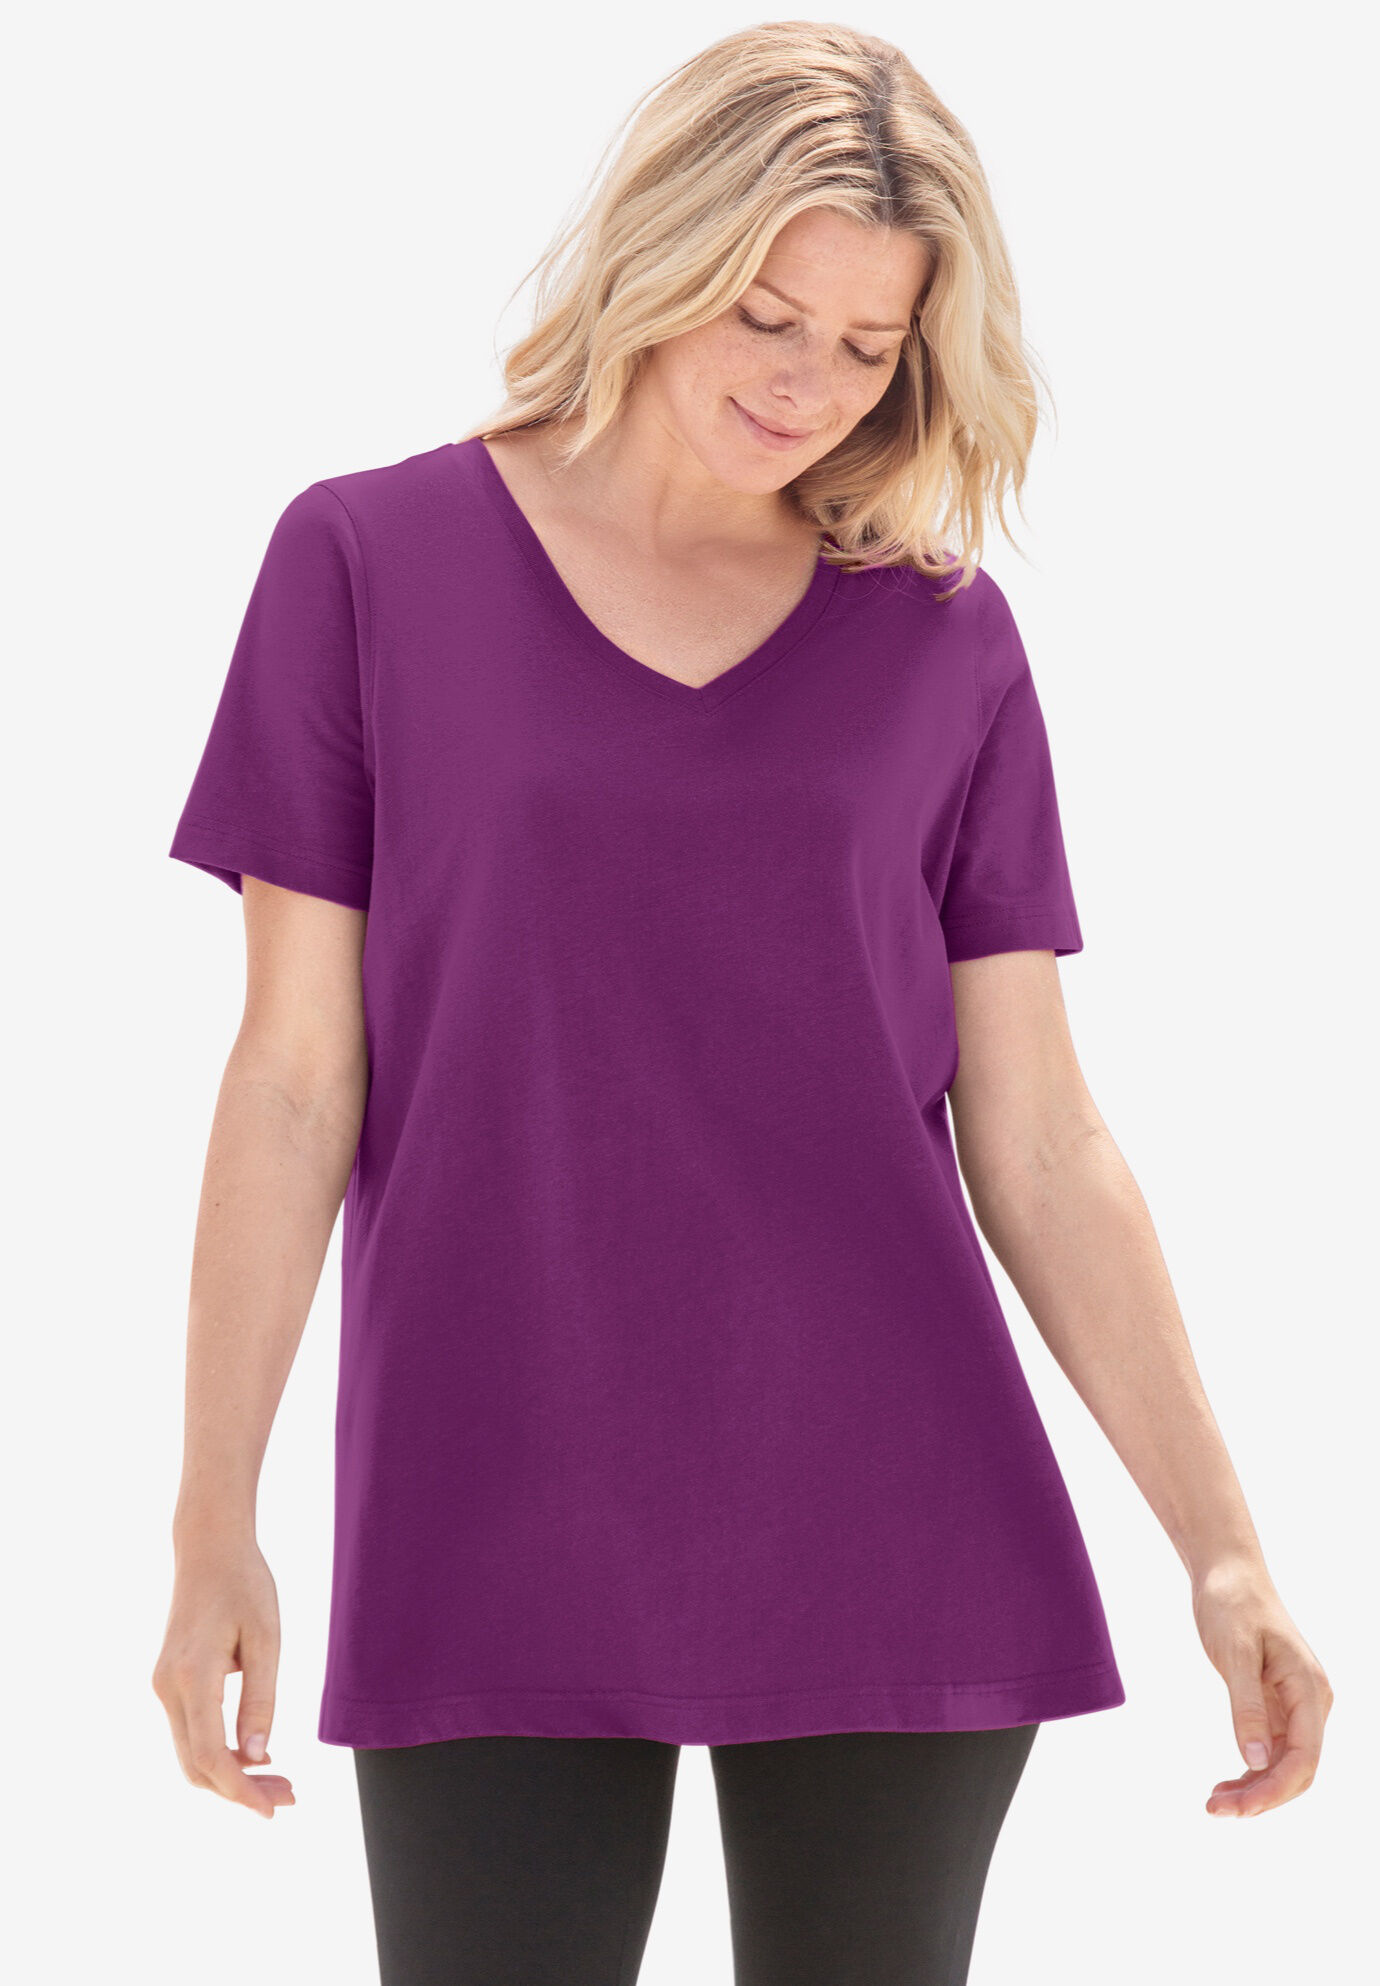 New York Central Park Mens Big Tall Soft T Shirt Plus Size Print Dress Tops